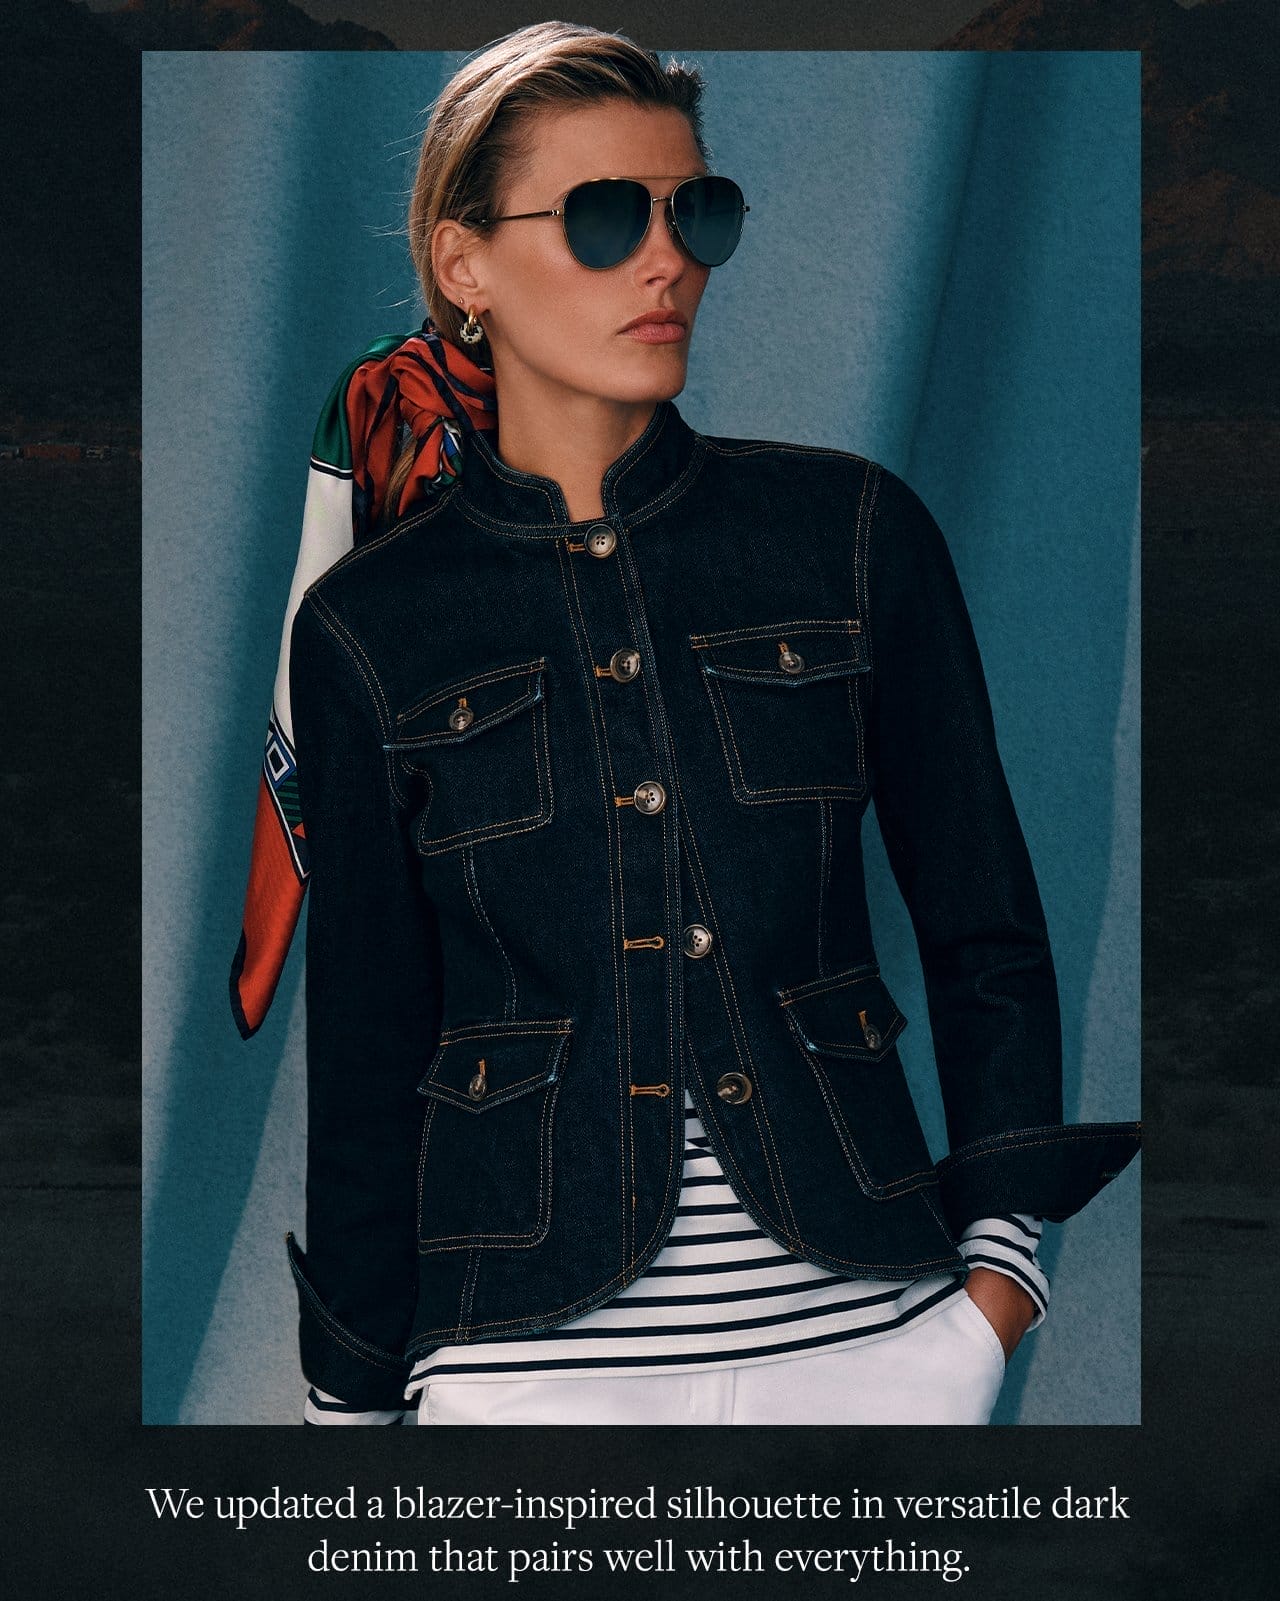 We updated a blazer-inspired silhouette in versatile dark denim that pairs well with everything.